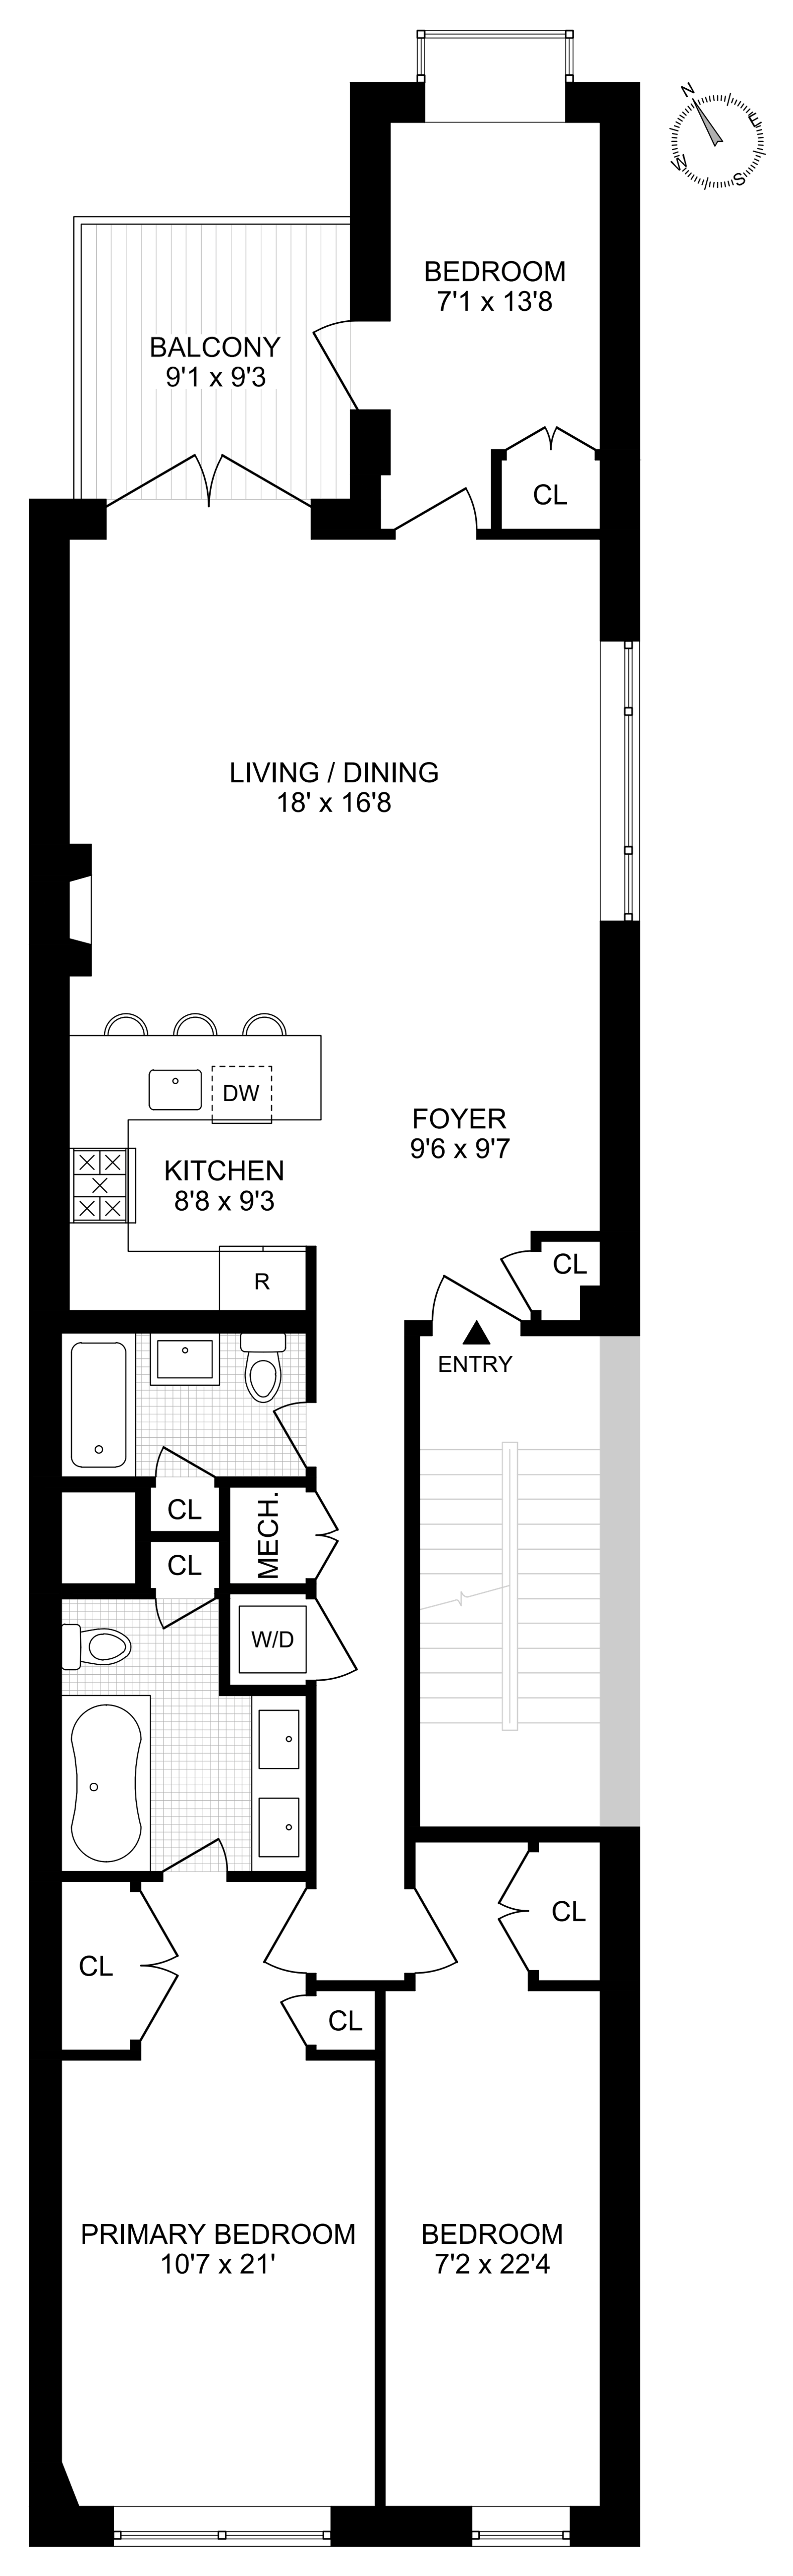 Floorplan for 103 West 117th Street